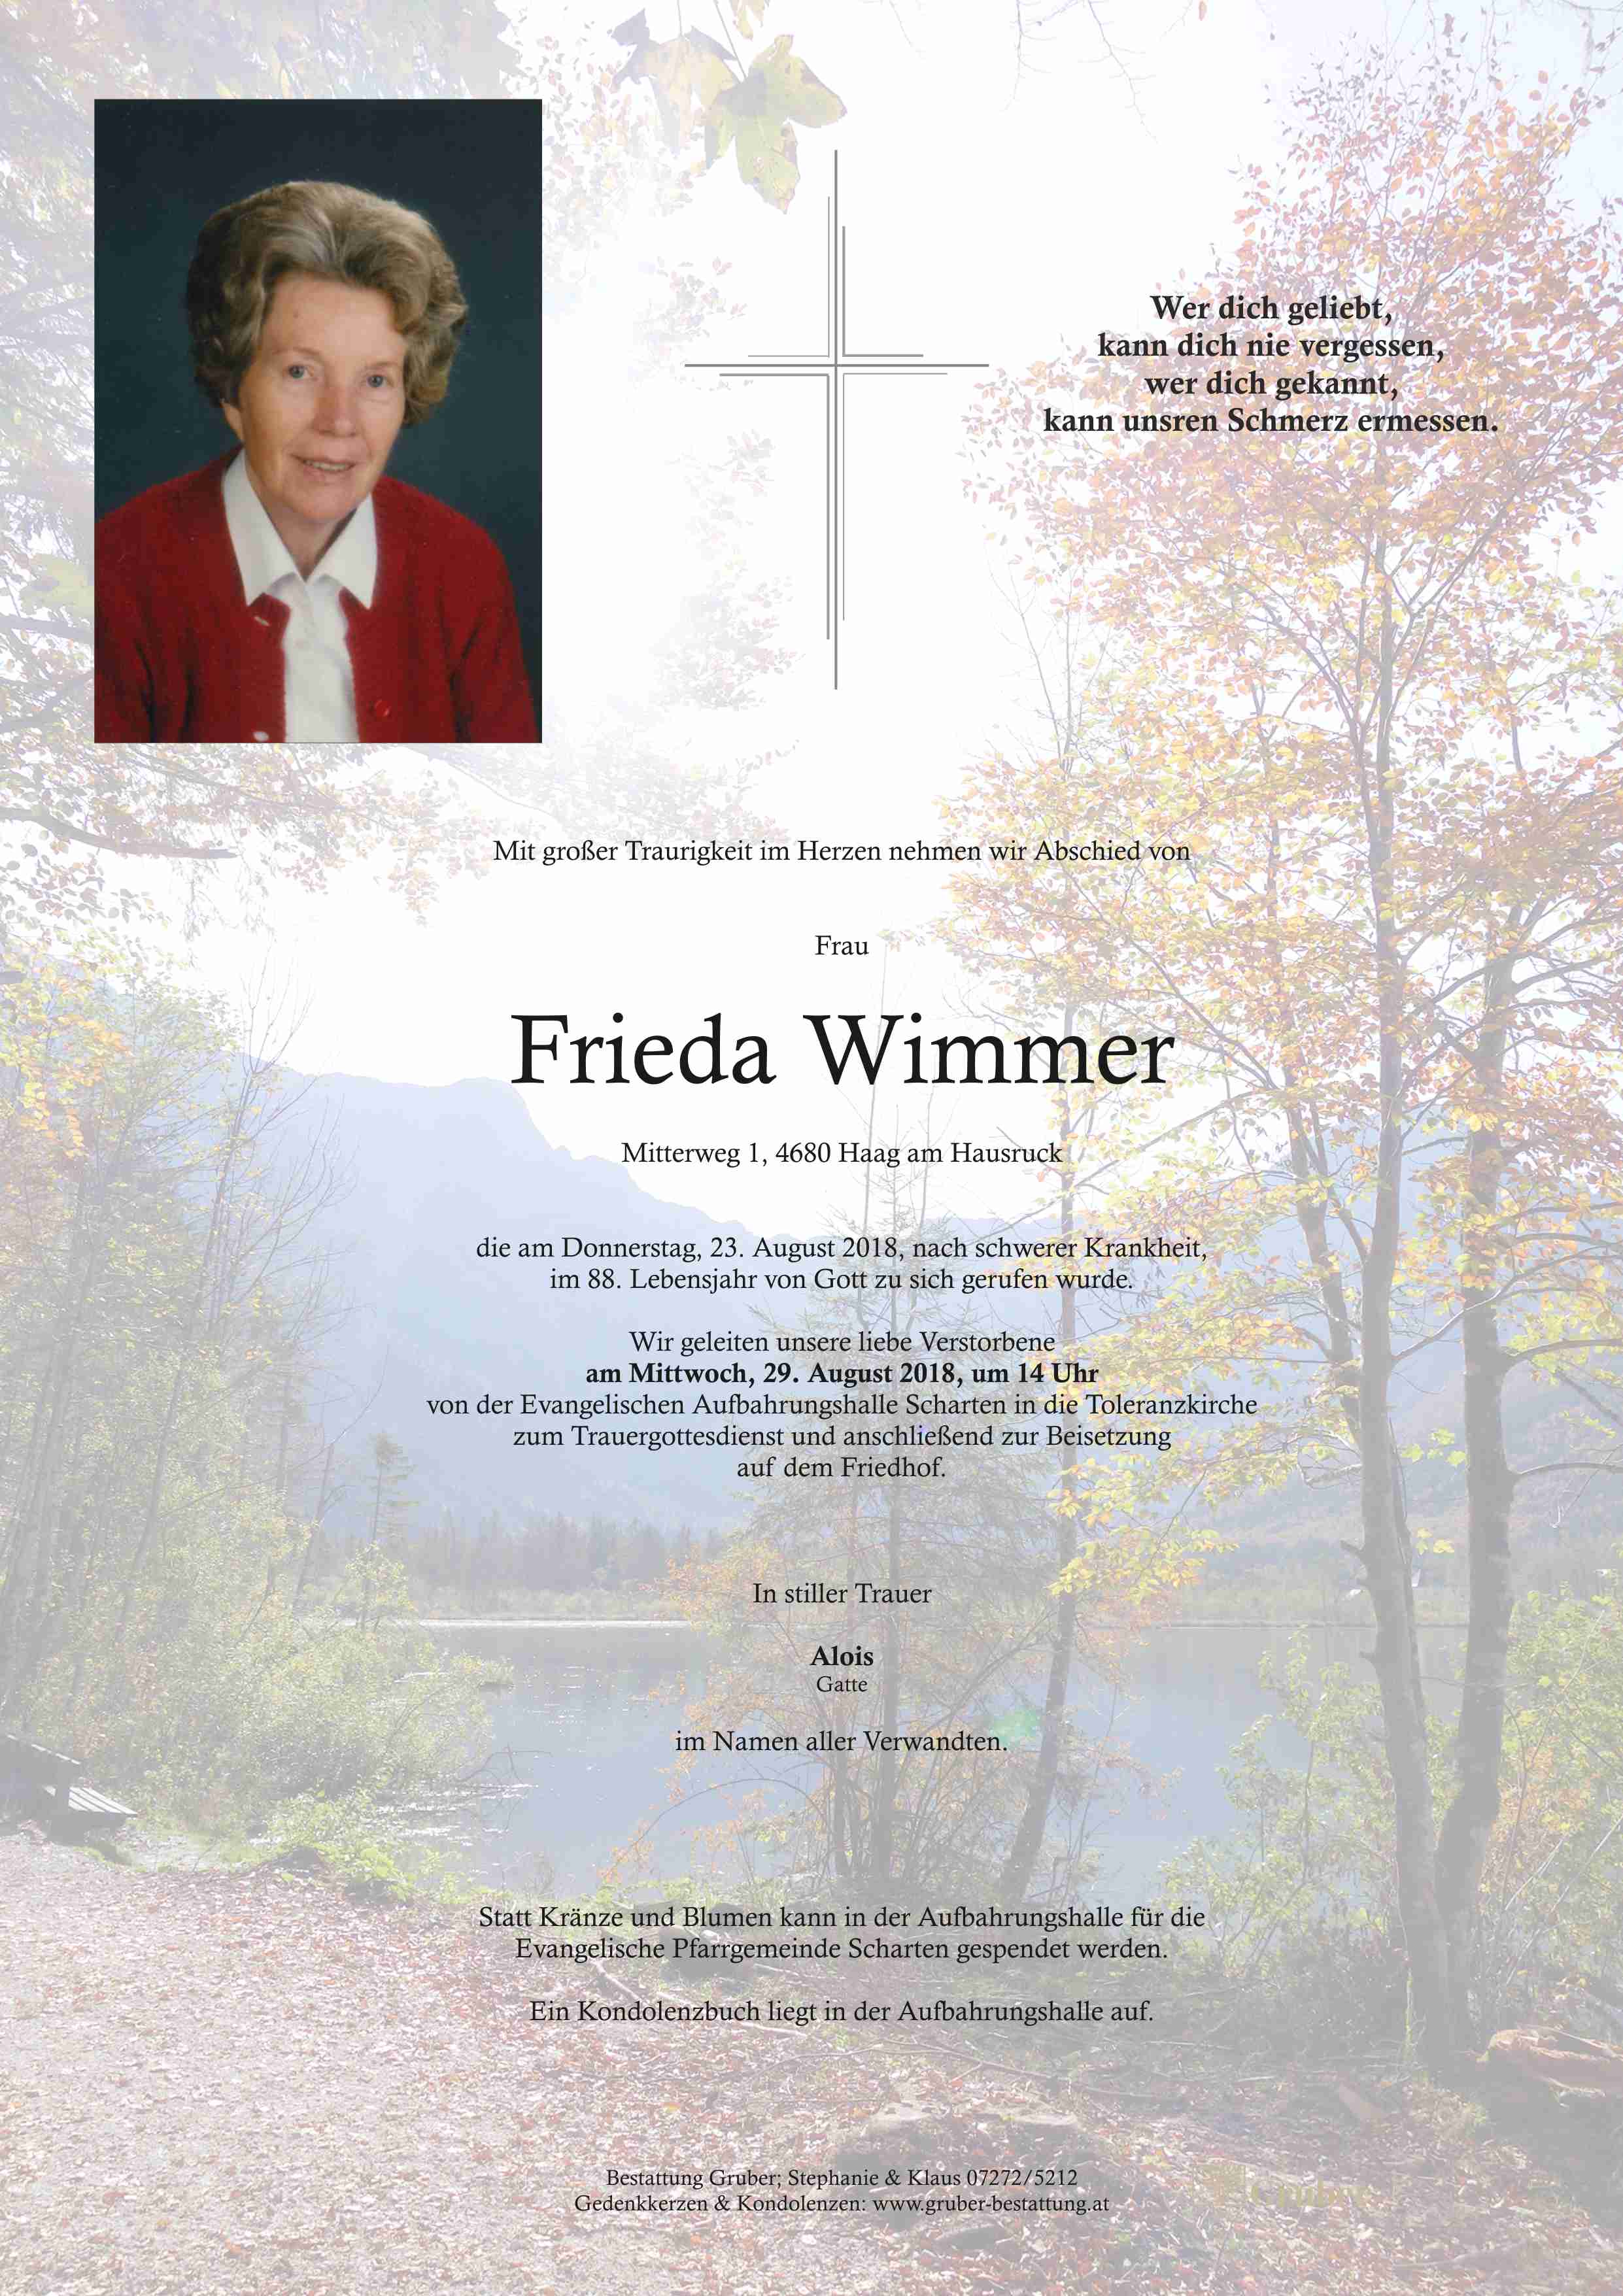 Frieda Wimmer (Scharten Evang.)